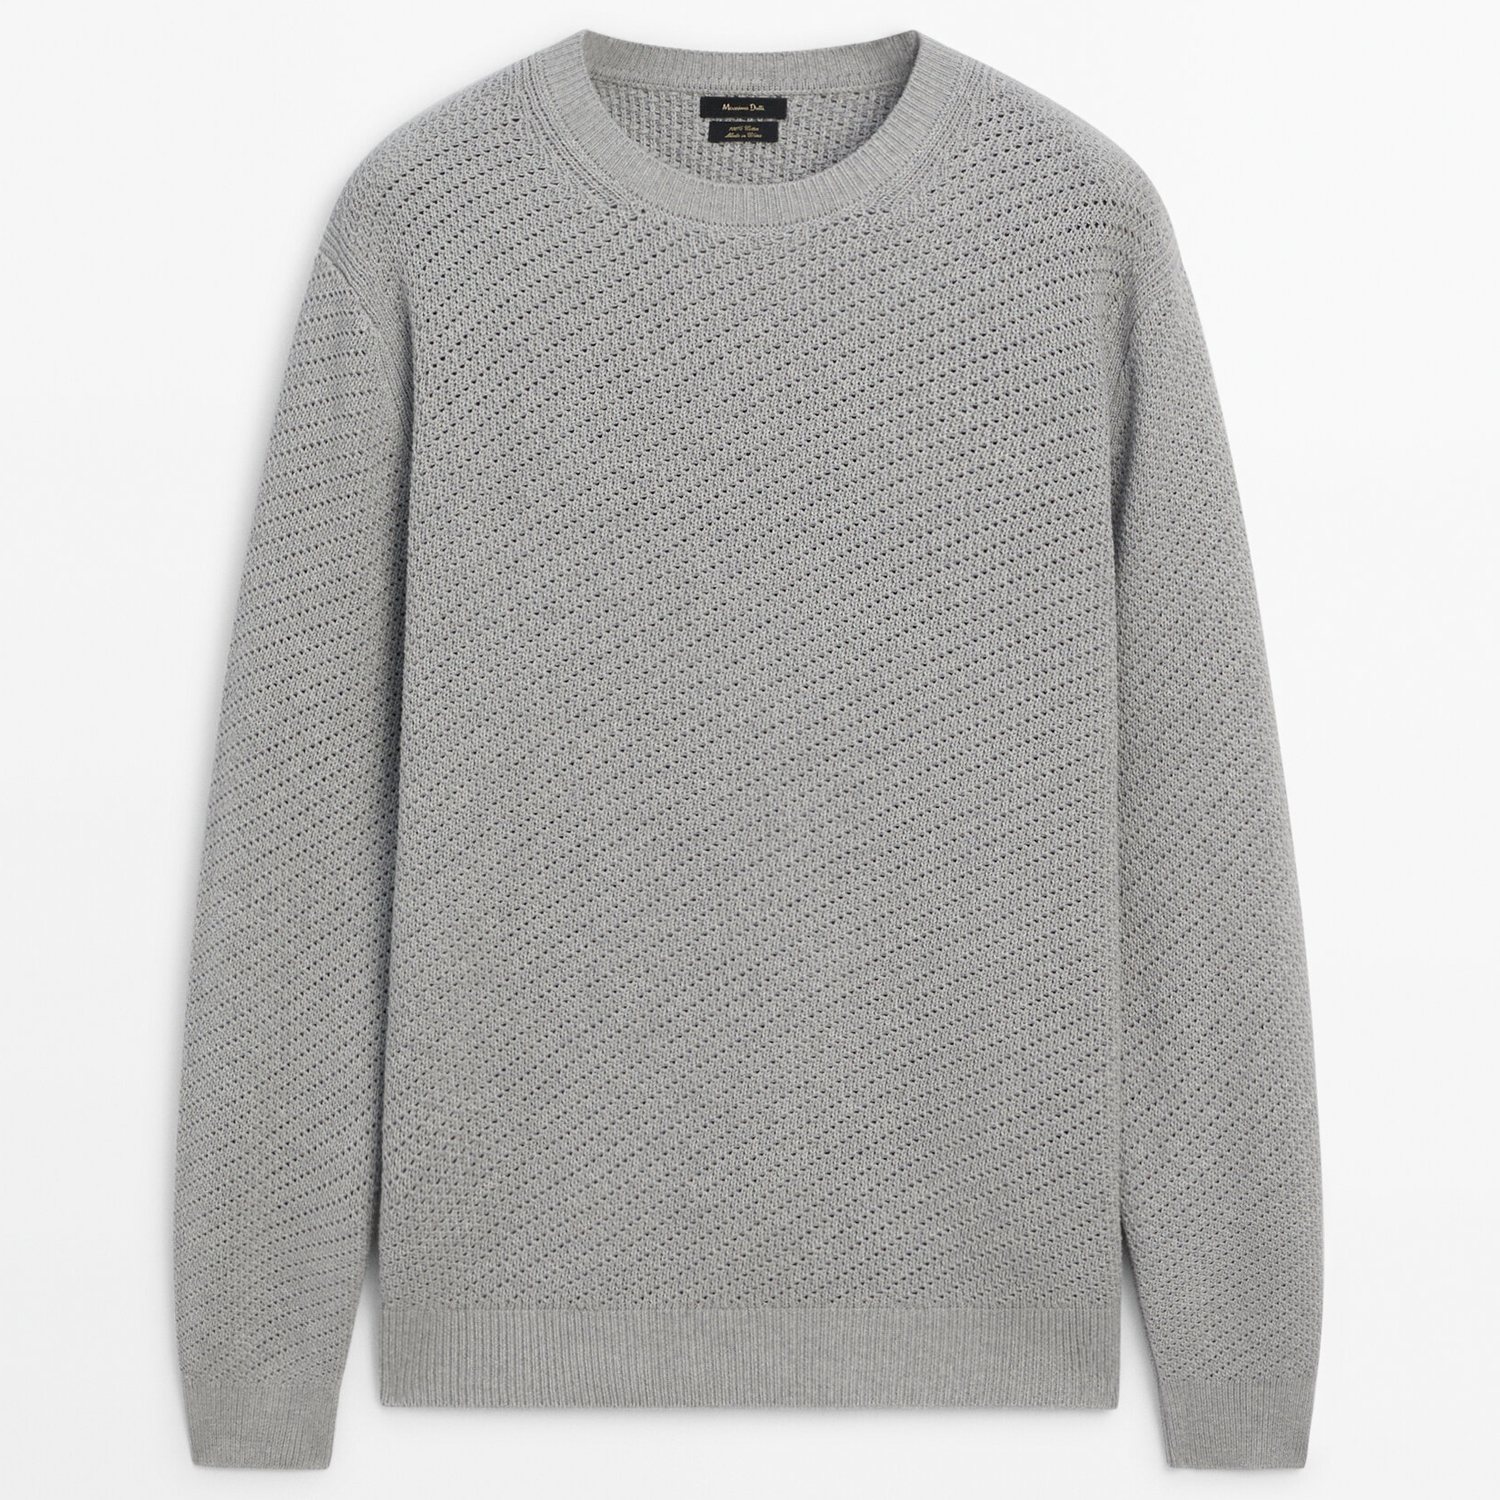 Свитер Massimo Dutti Crew Neck Cotton Mesh Knit, серый свитер massimo dutti 100% cotton crew neck чёрный